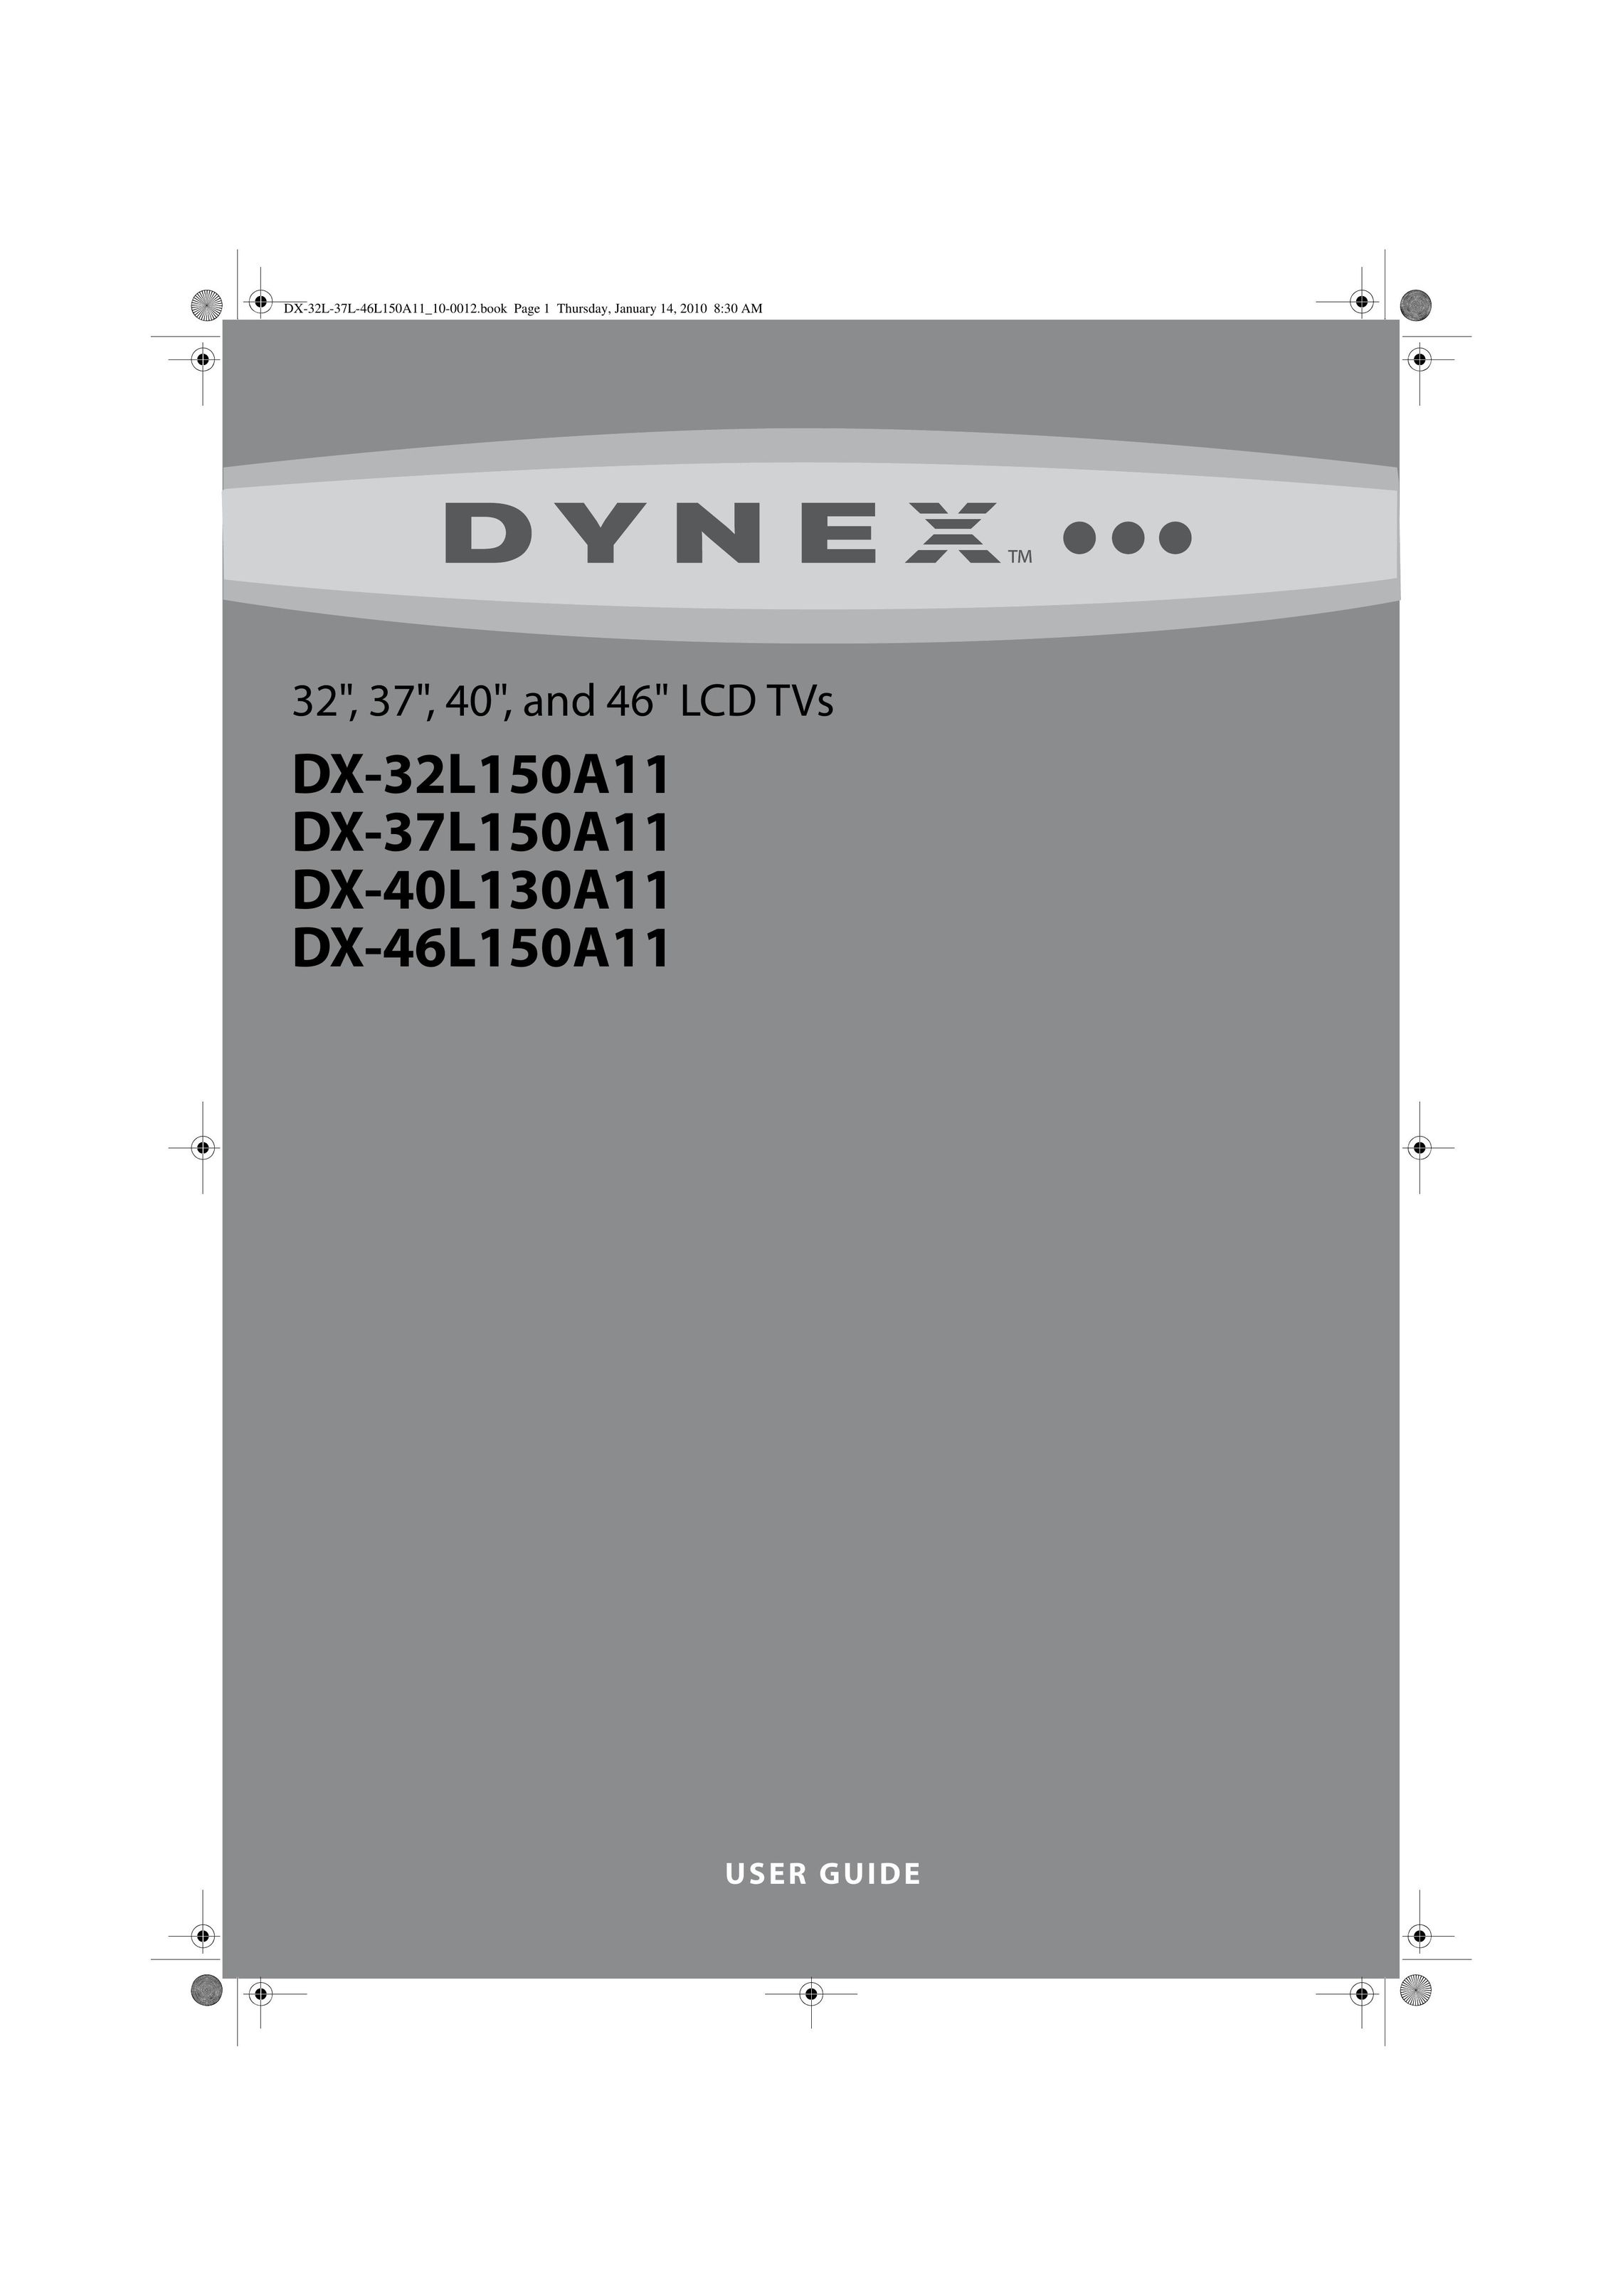 Dynex DX-40L130A11 Flat Panel Television User Manual